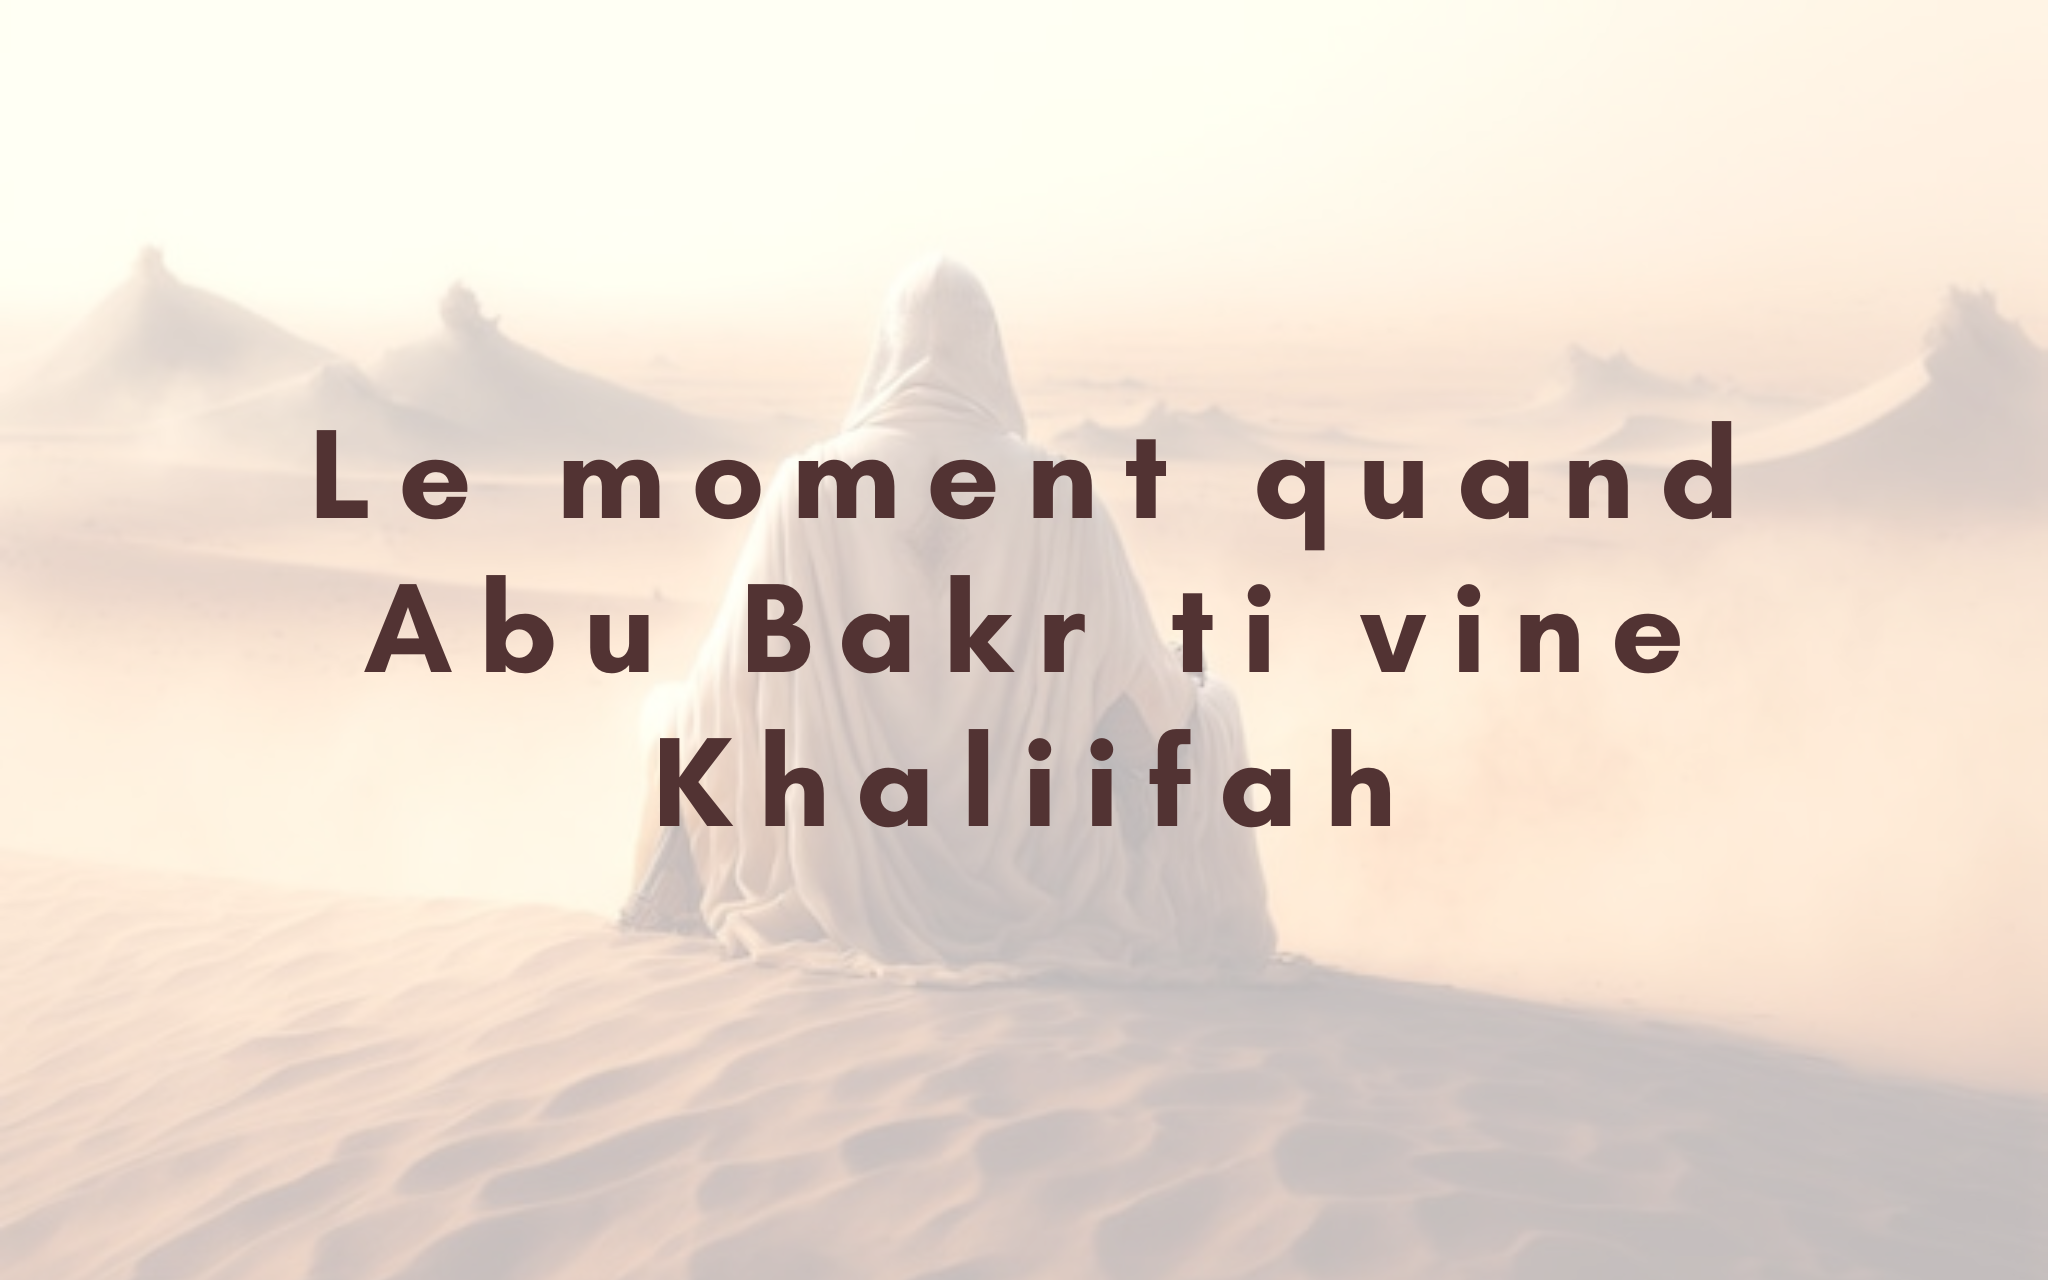 Le moment quand Abu Bakr ti vine Khaliifah